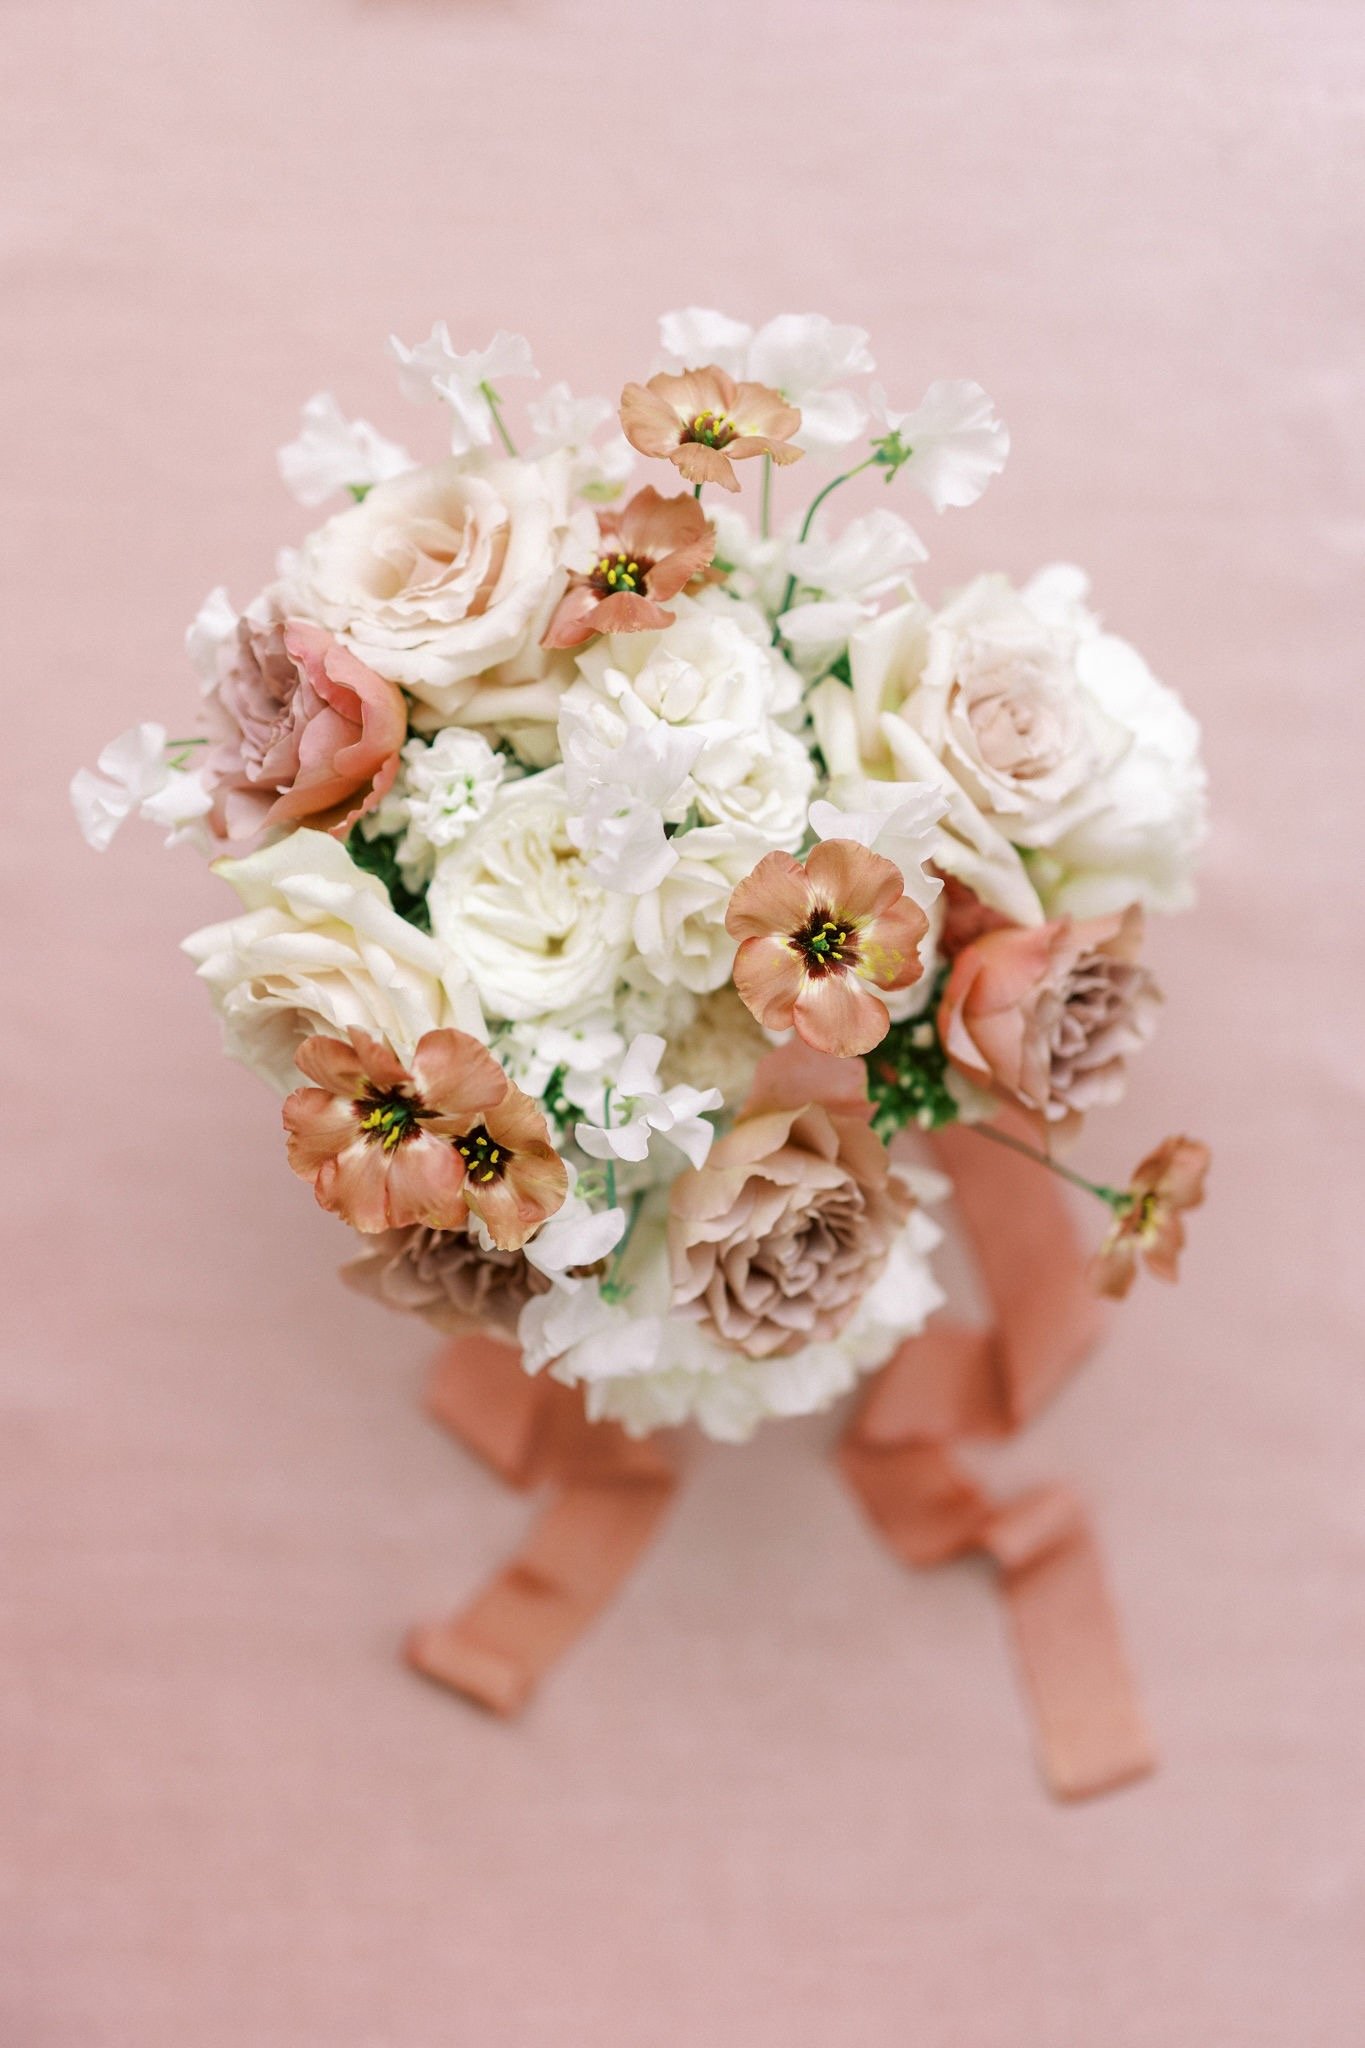 Floresie_luxury_wedding_florist_france_Lyon - 5.jpeg